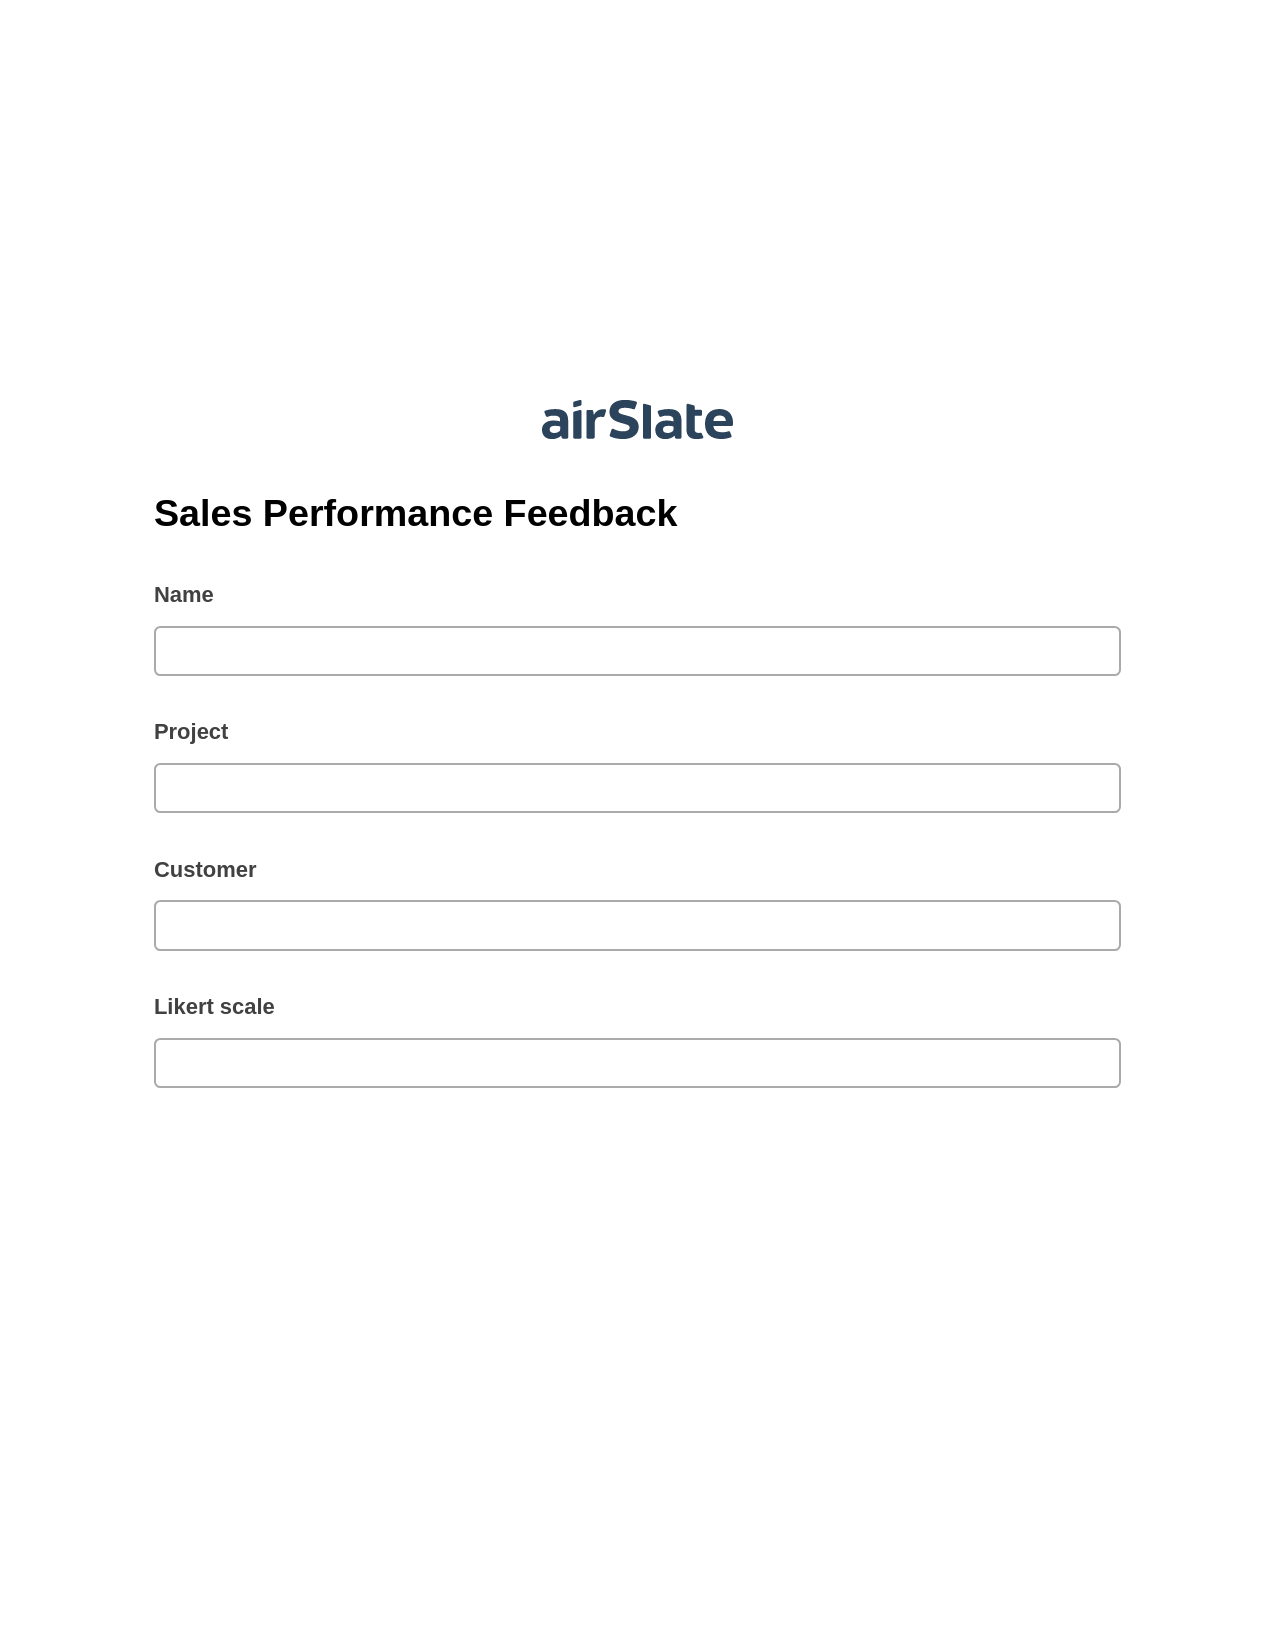 Multirole Sales Performance Feedback Pre-fill Slate from MS Dynamics 365 Records Bot, Slack Notification Bot, Dropbox Bot